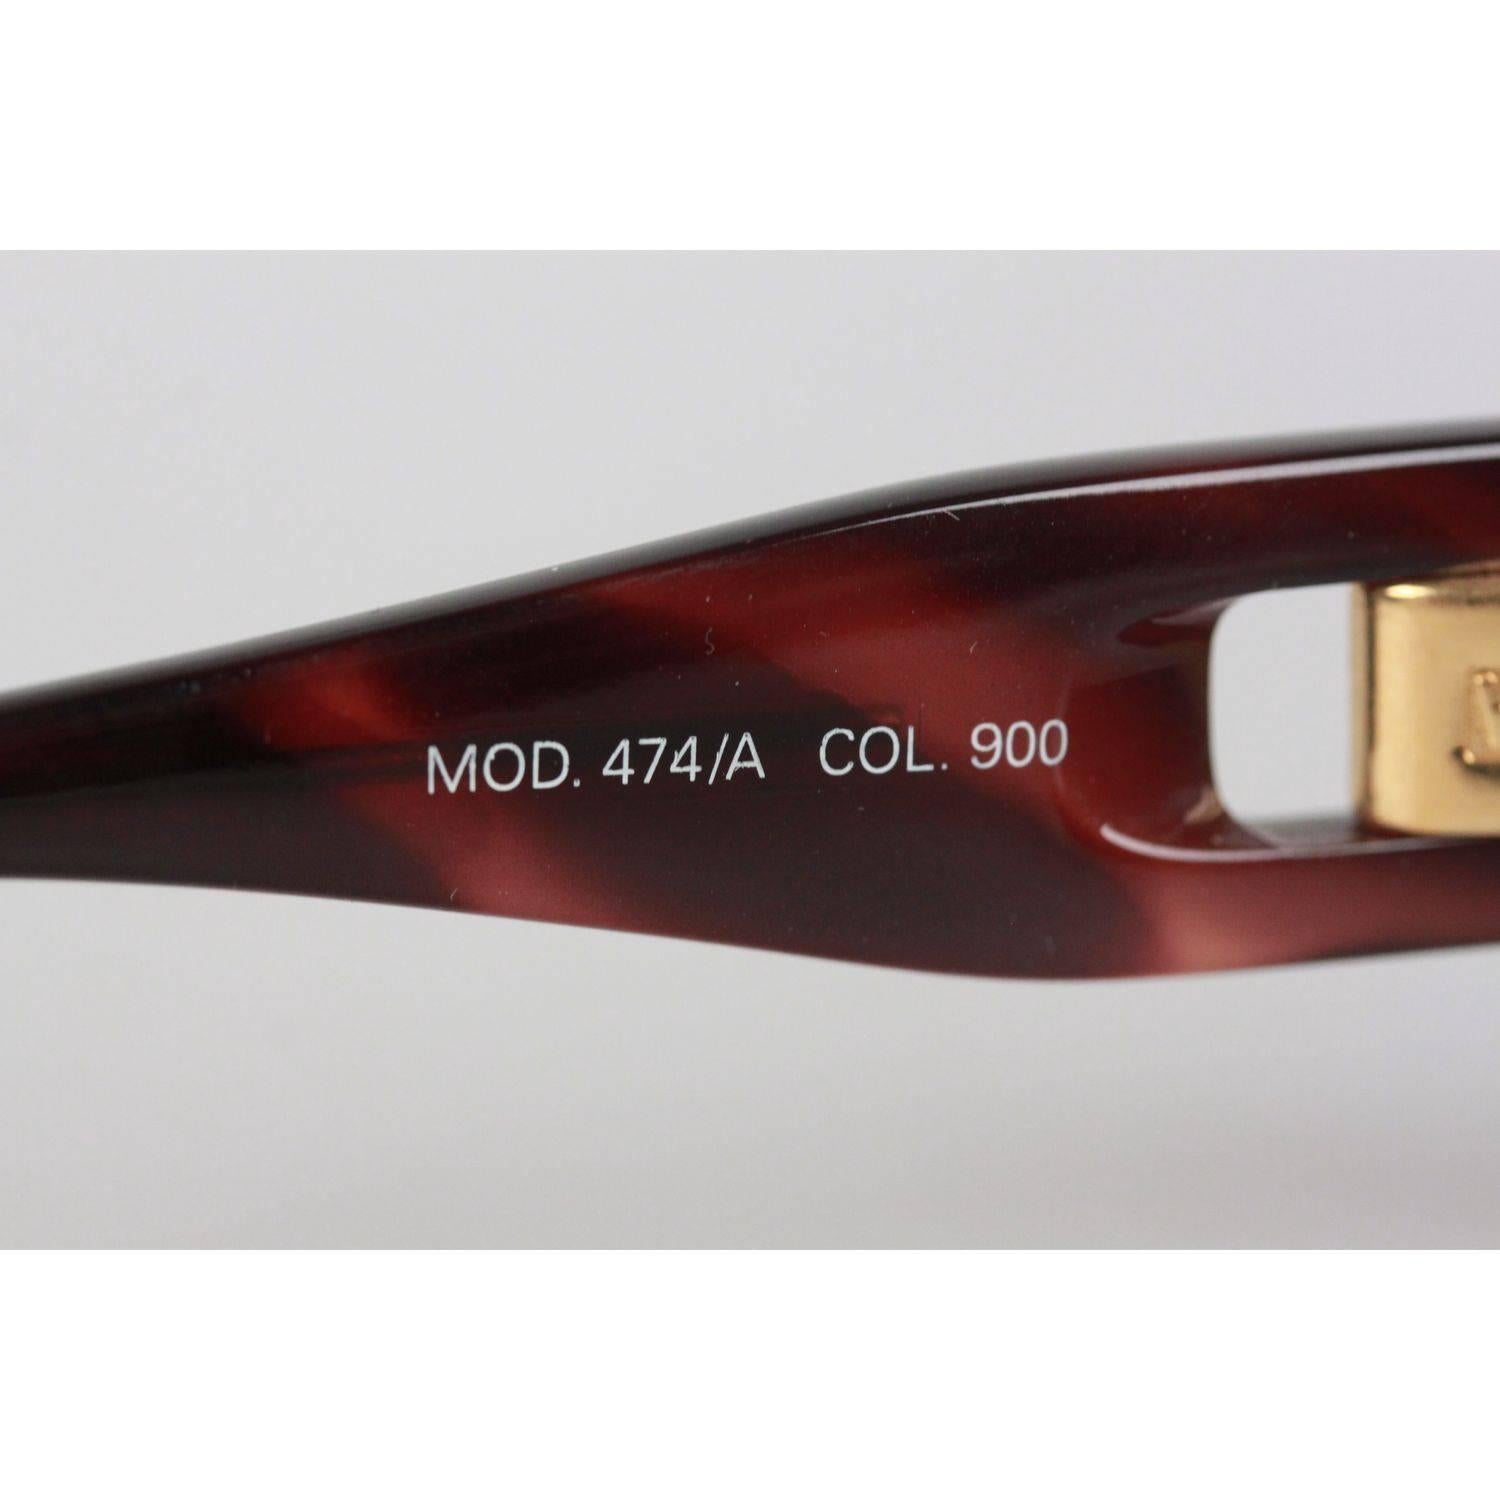 Women's GIANNI VERSACE MEDUSA Brown Sunglasses 474 A Col 900 52mm NOS